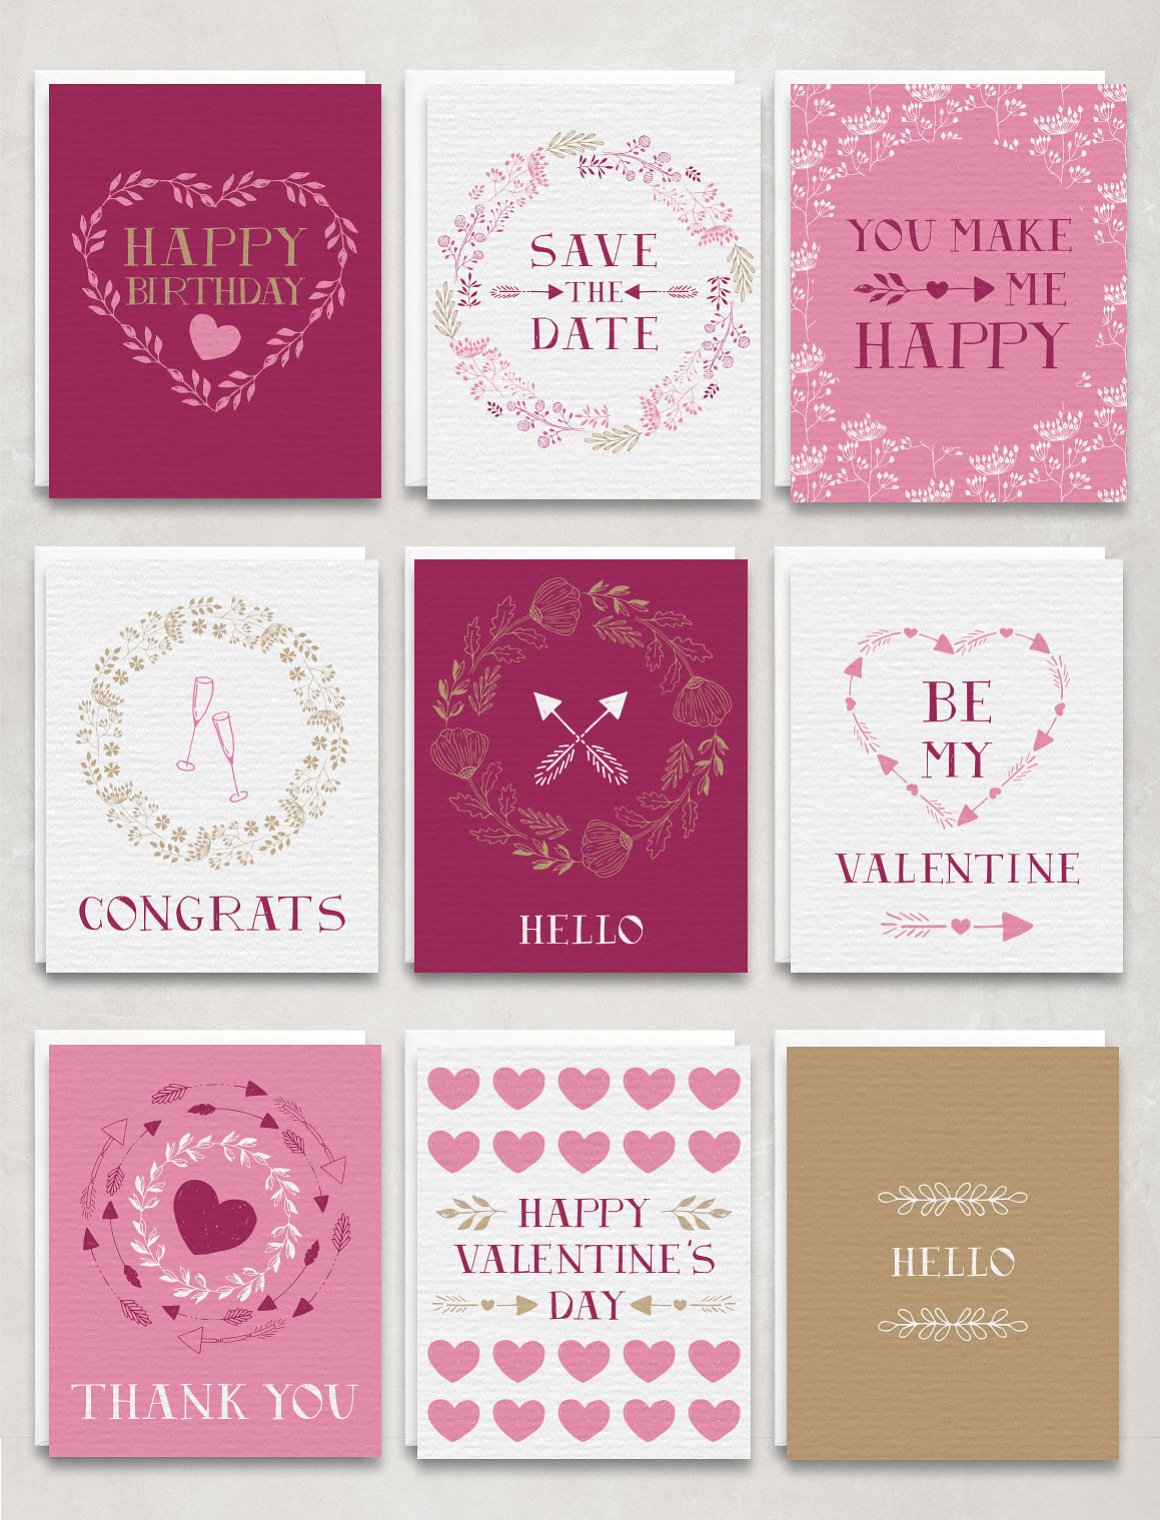 Colorful valentine cards design.